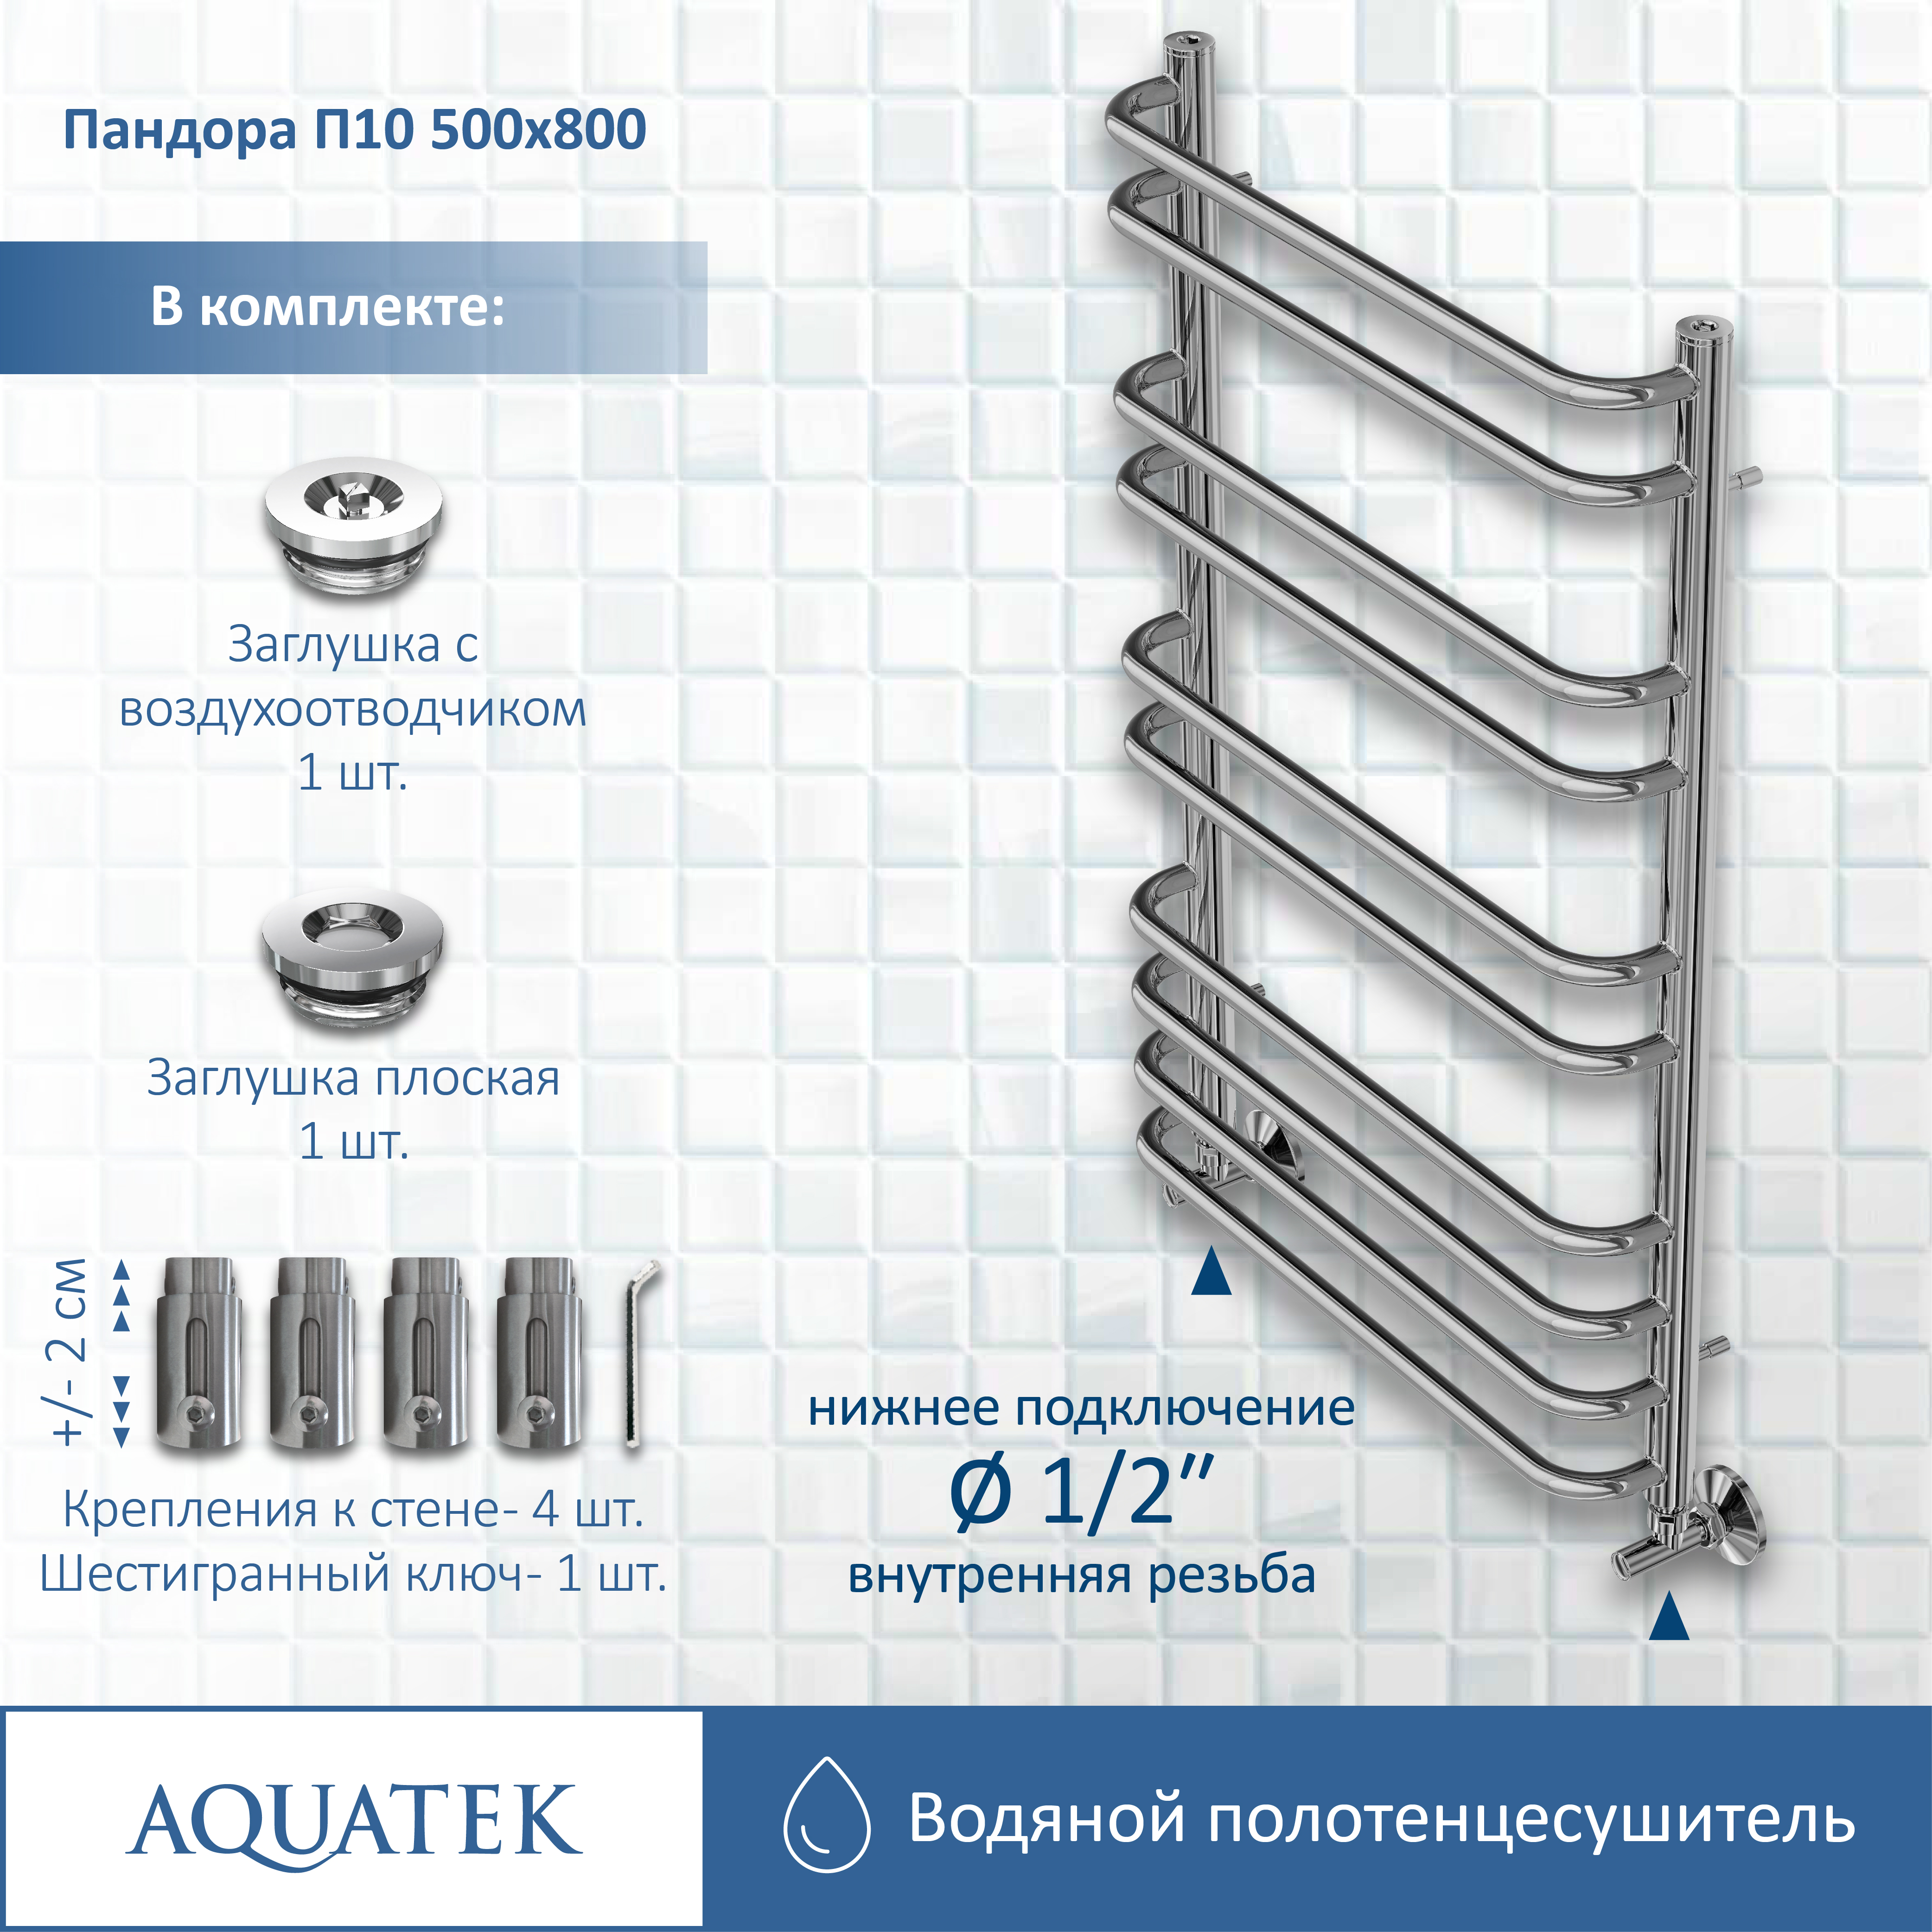 Полотенцесушитель водяной Aquatek Пандора П10 500х800 AQ RRС1080CH - 12